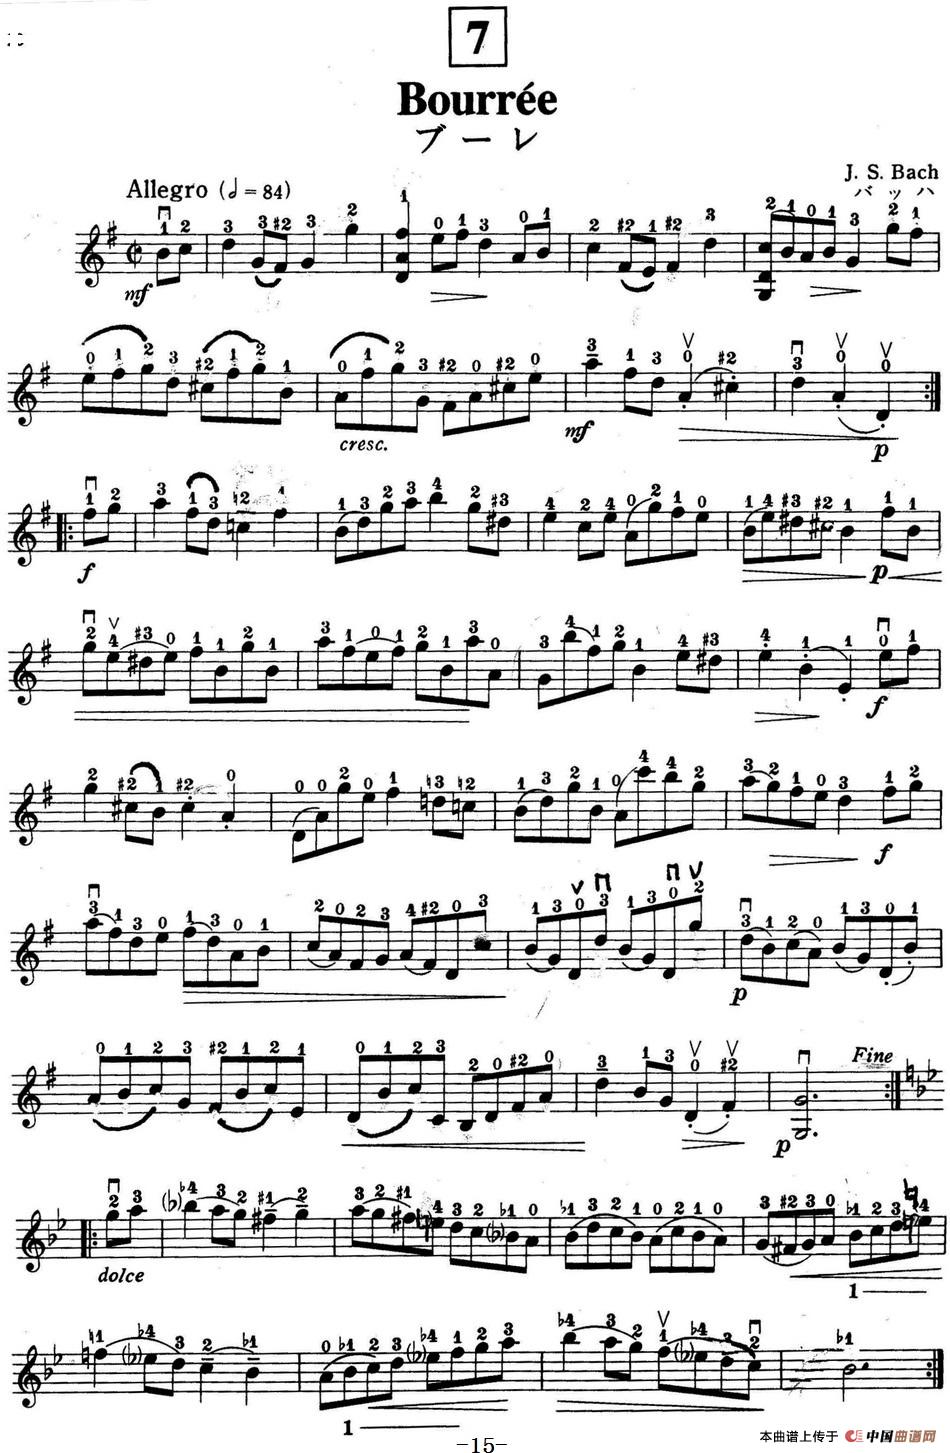 铃木小提琴教材第三册（Suzuki Violin School VIOLIN